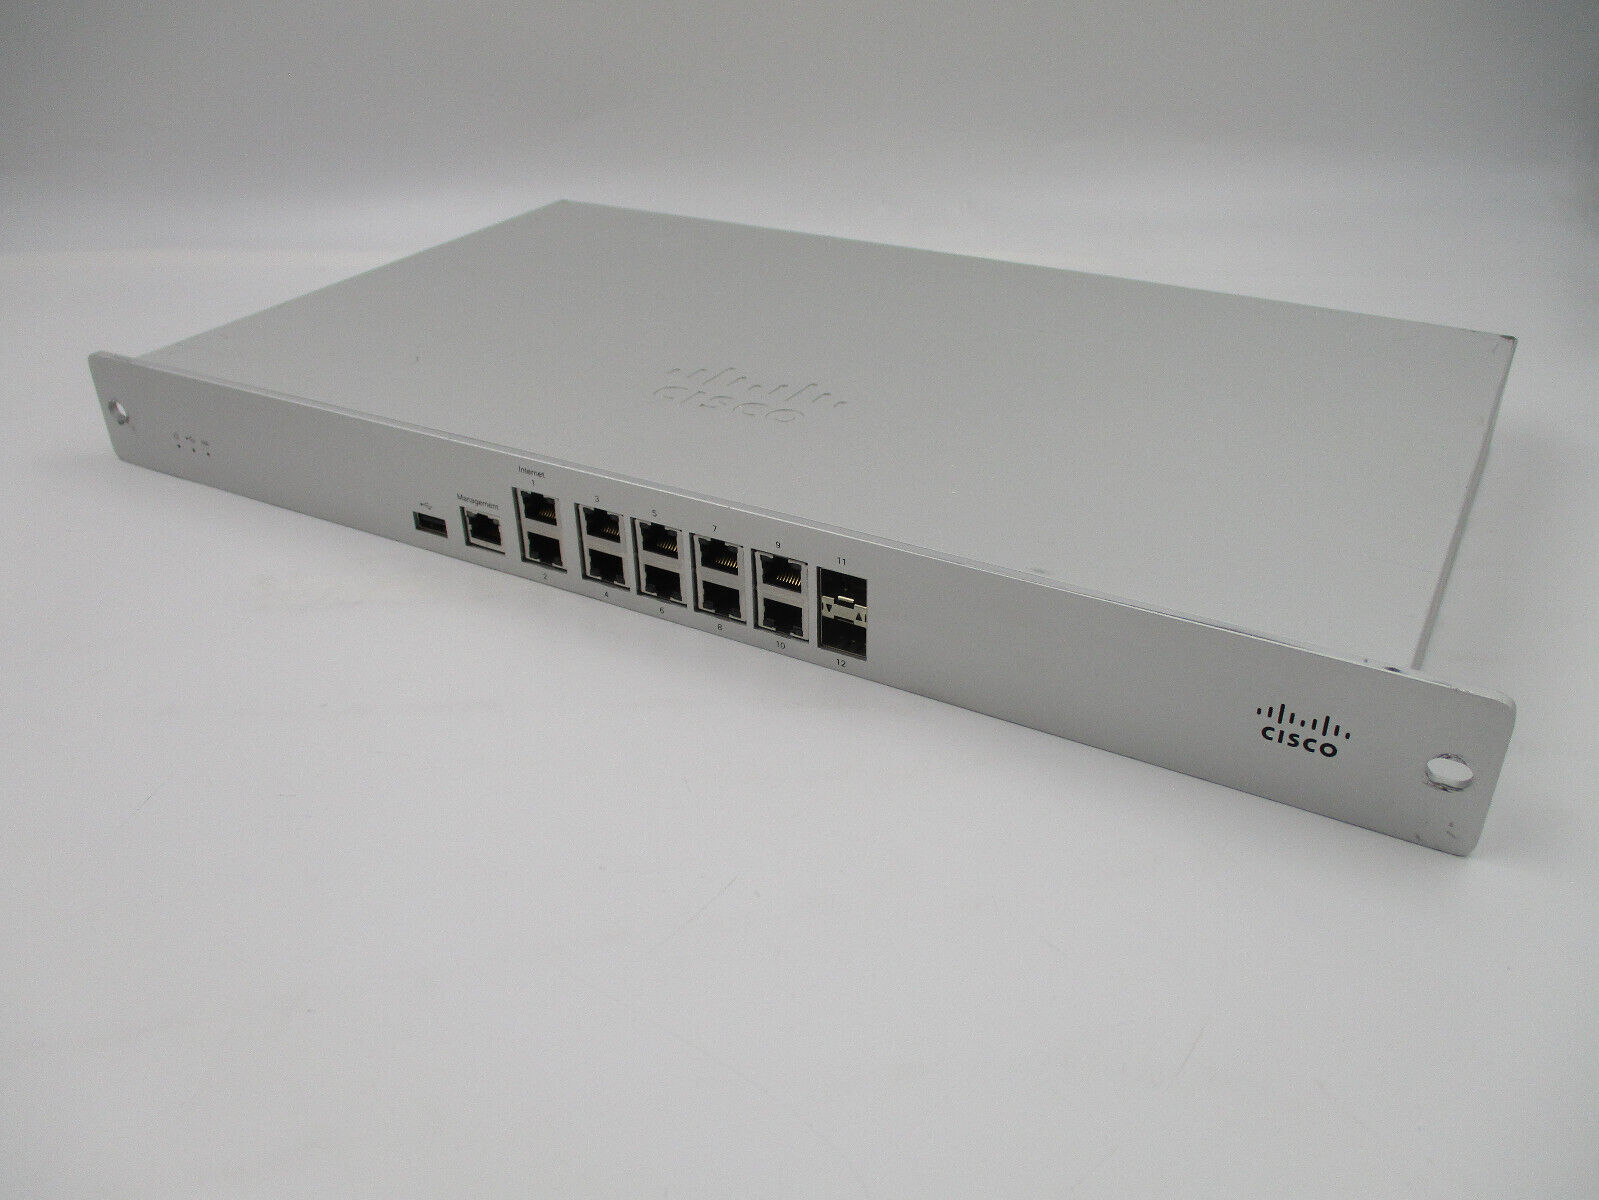 Cisco Meraki MX84-HW Cloud Managed Security Appliance UNCLAIMED Tested